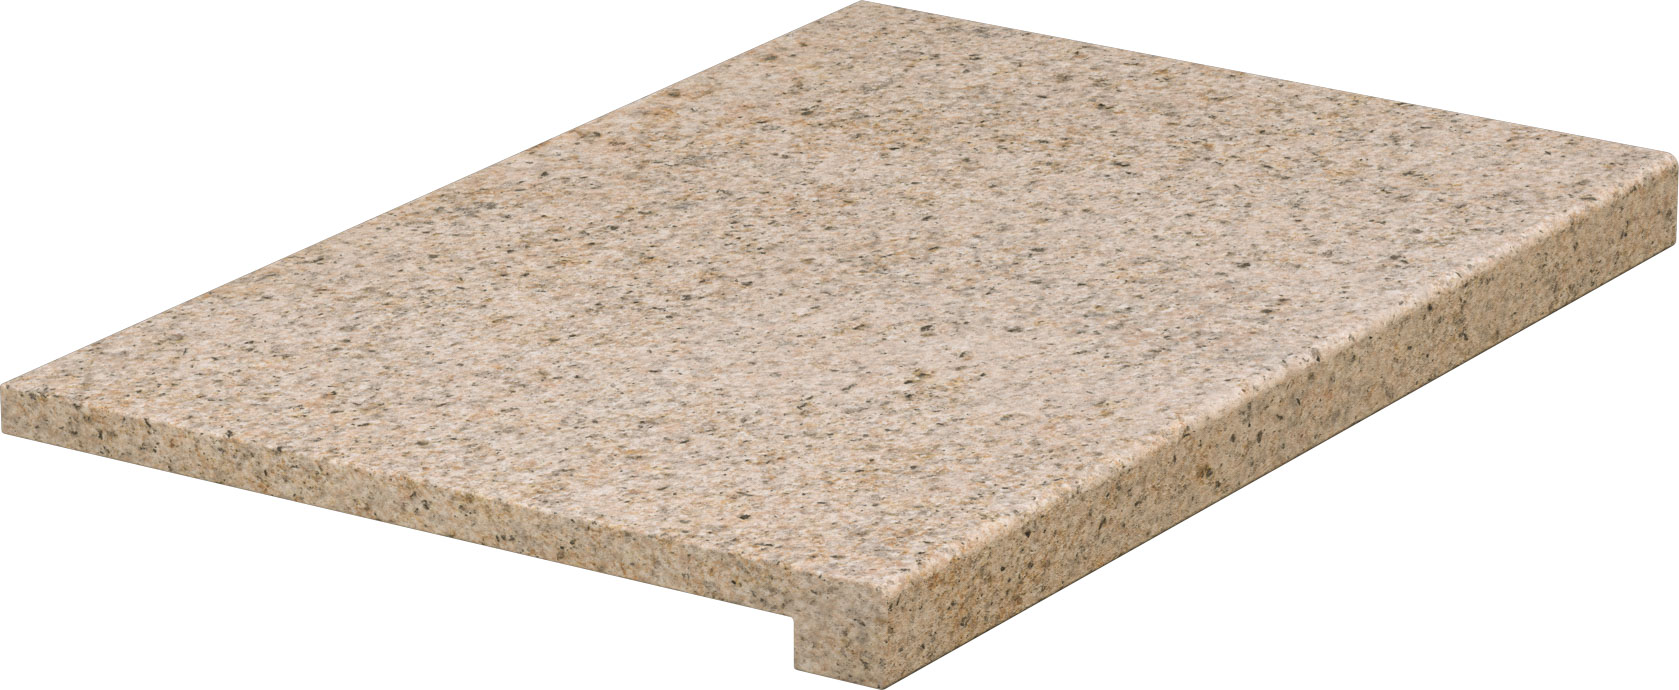 Almond Granite Rebated Square Edge 40